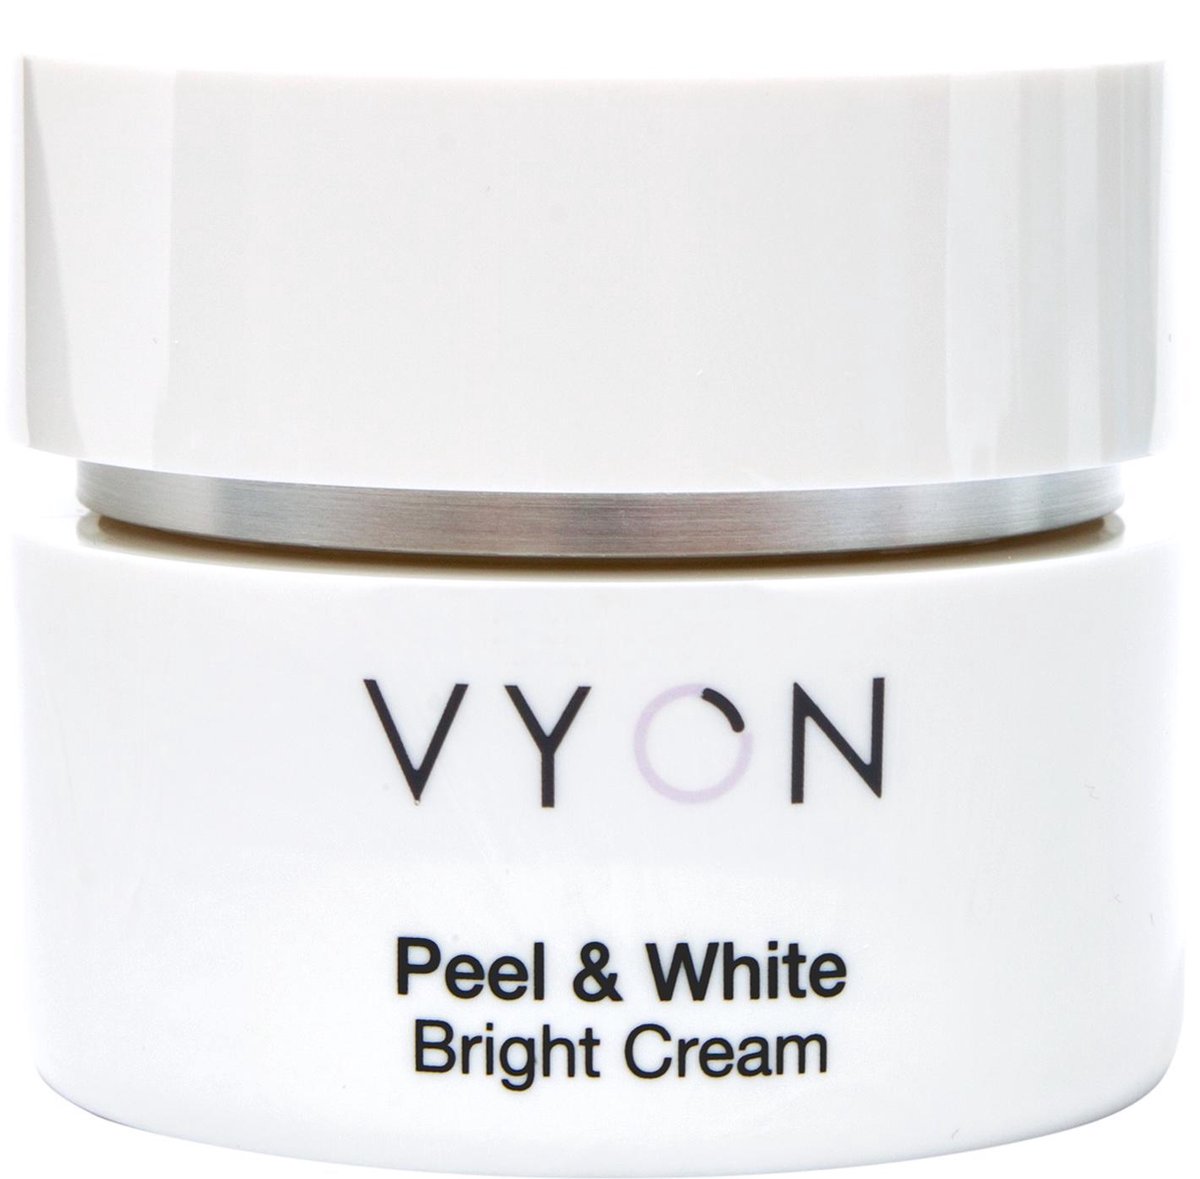 Vyon Peel & White Bright Cream